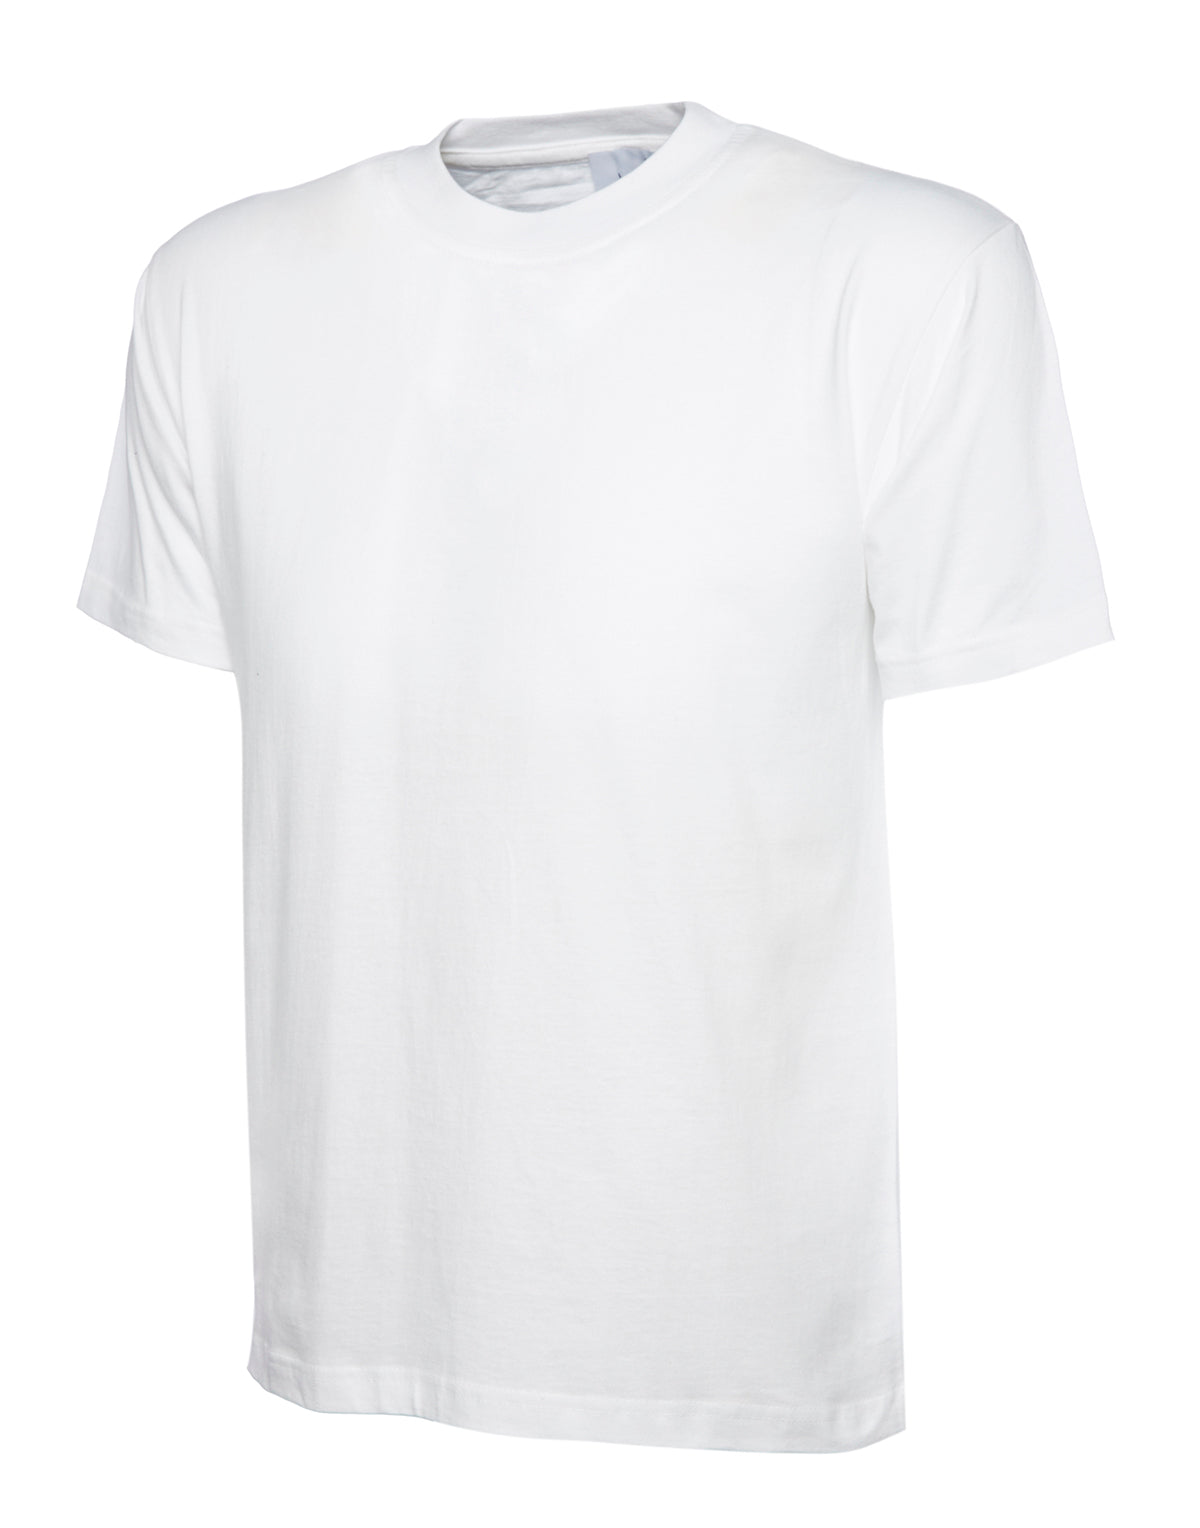 Uneek Premium Unisex T-shirt UC302 - White